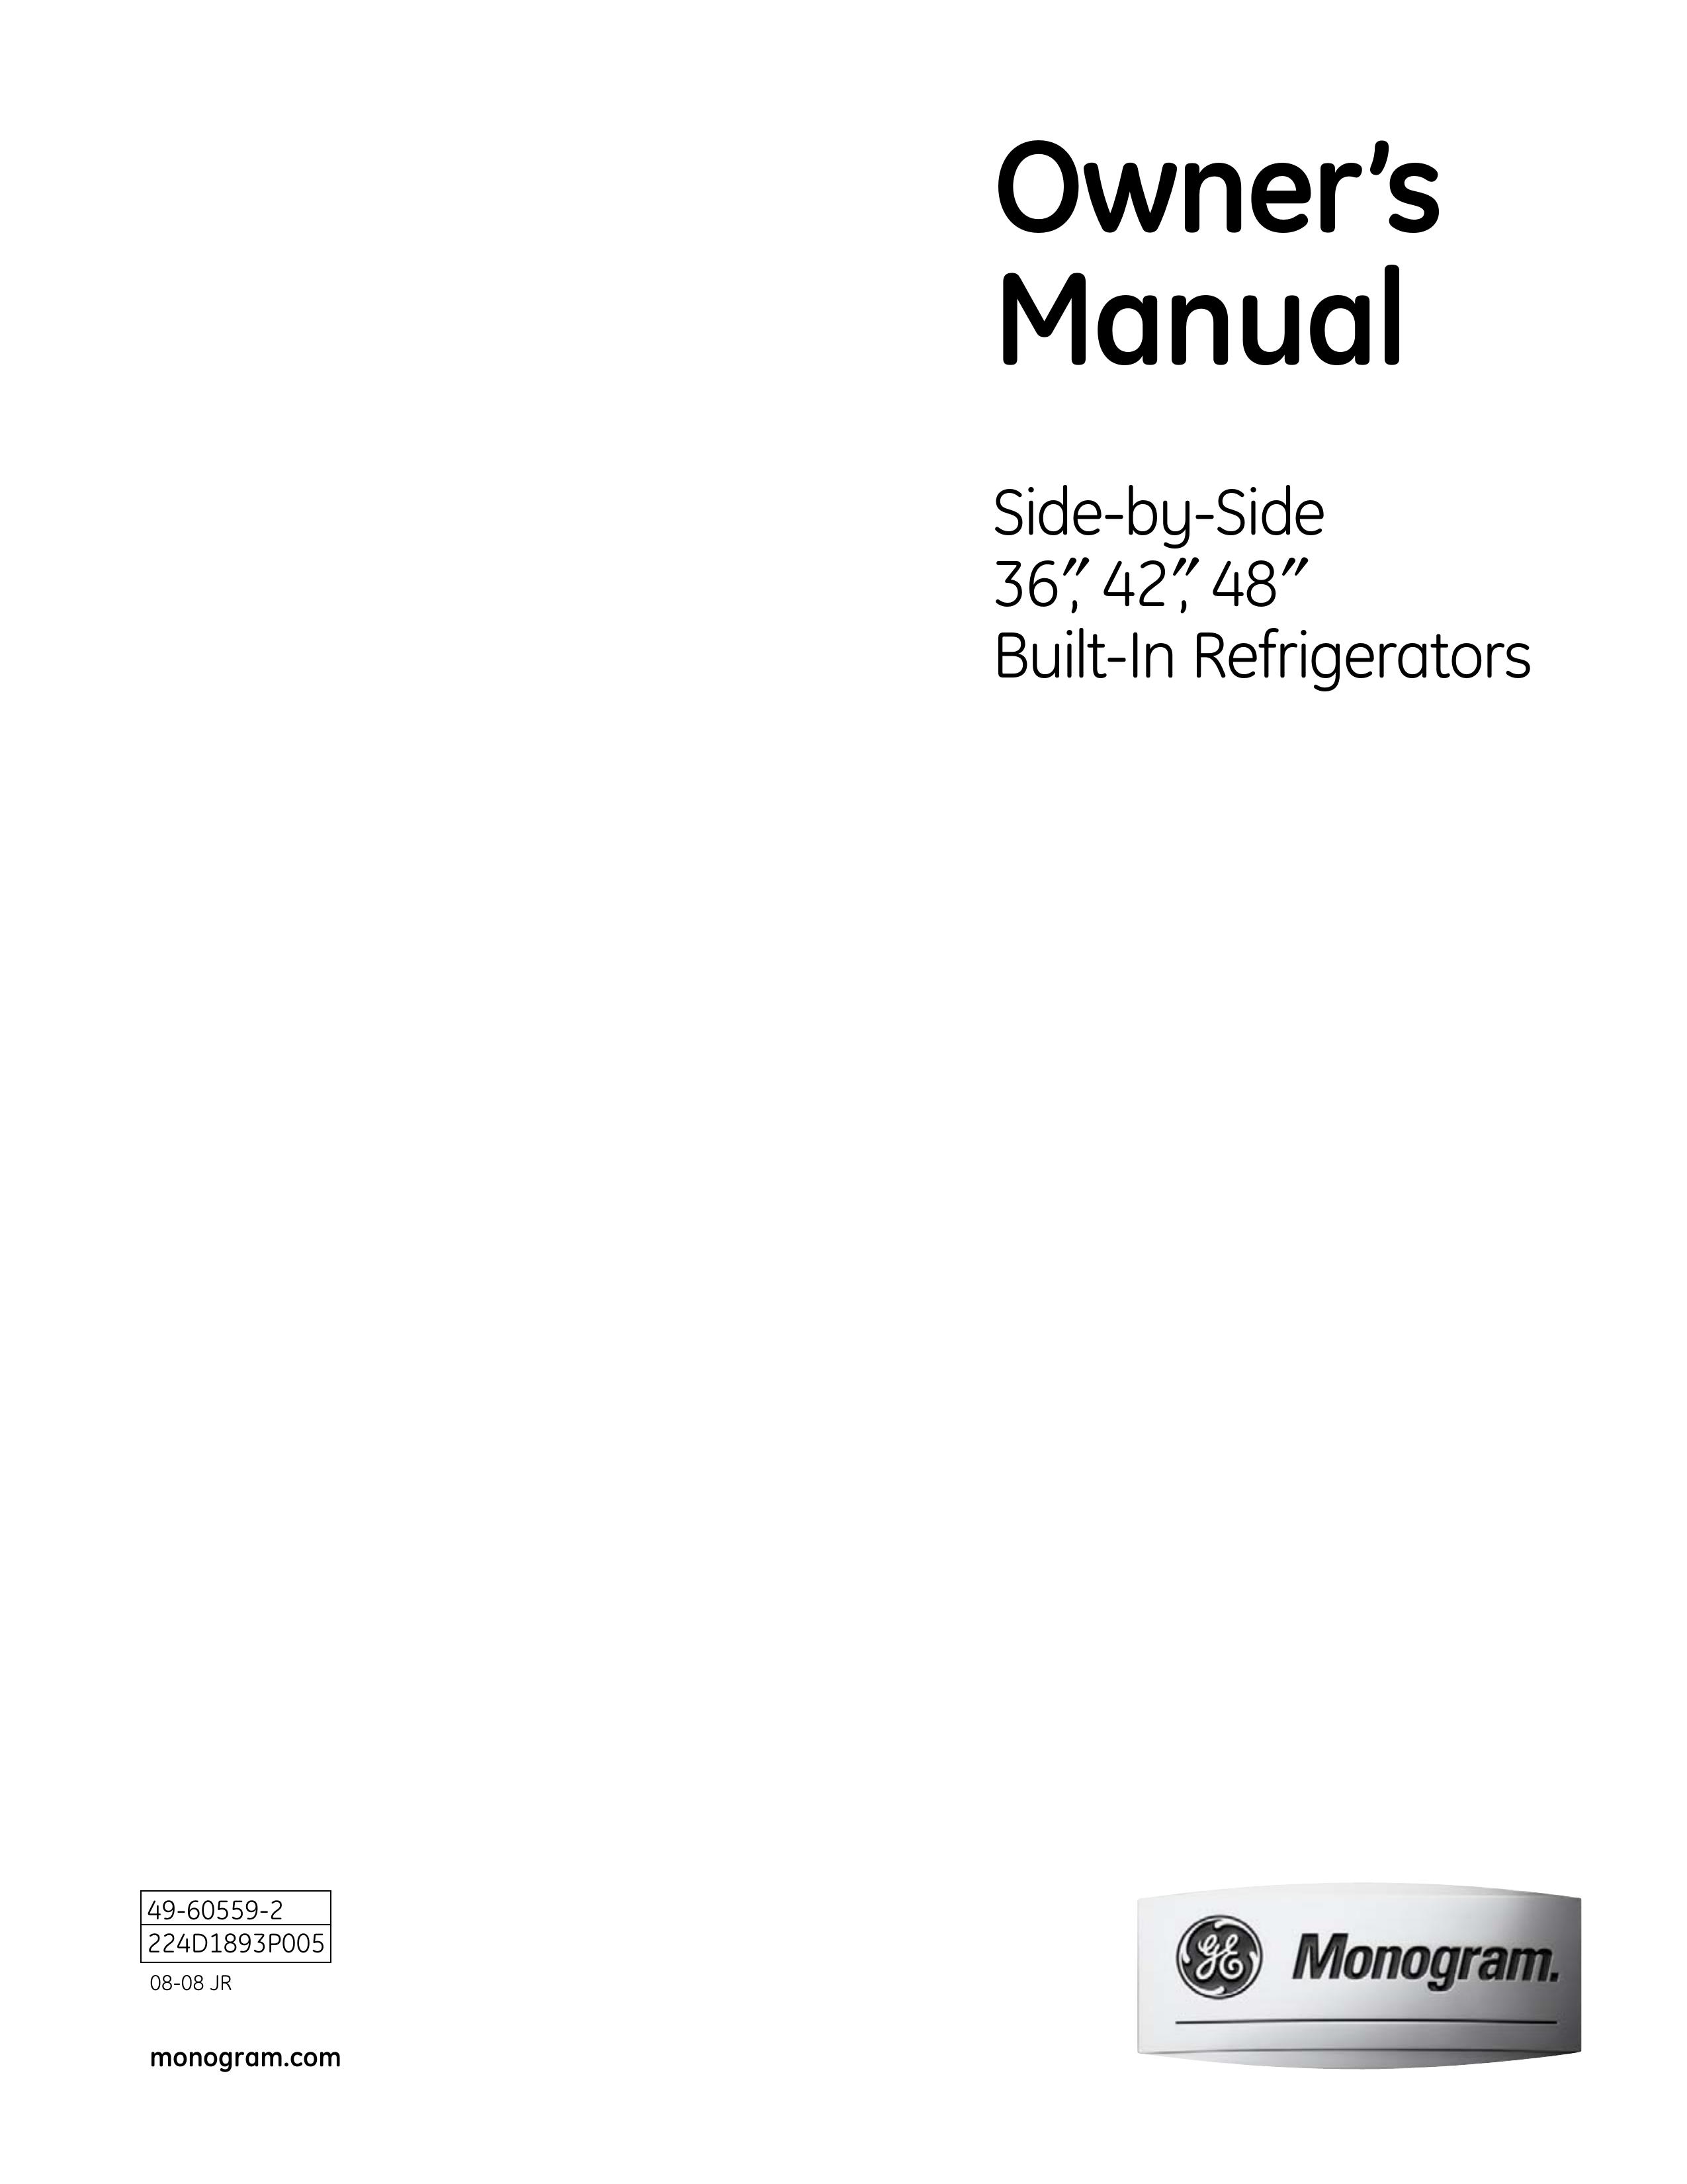 GE Monogram Side-by-Side Built-In Refrigerators Refrigerator User Manual